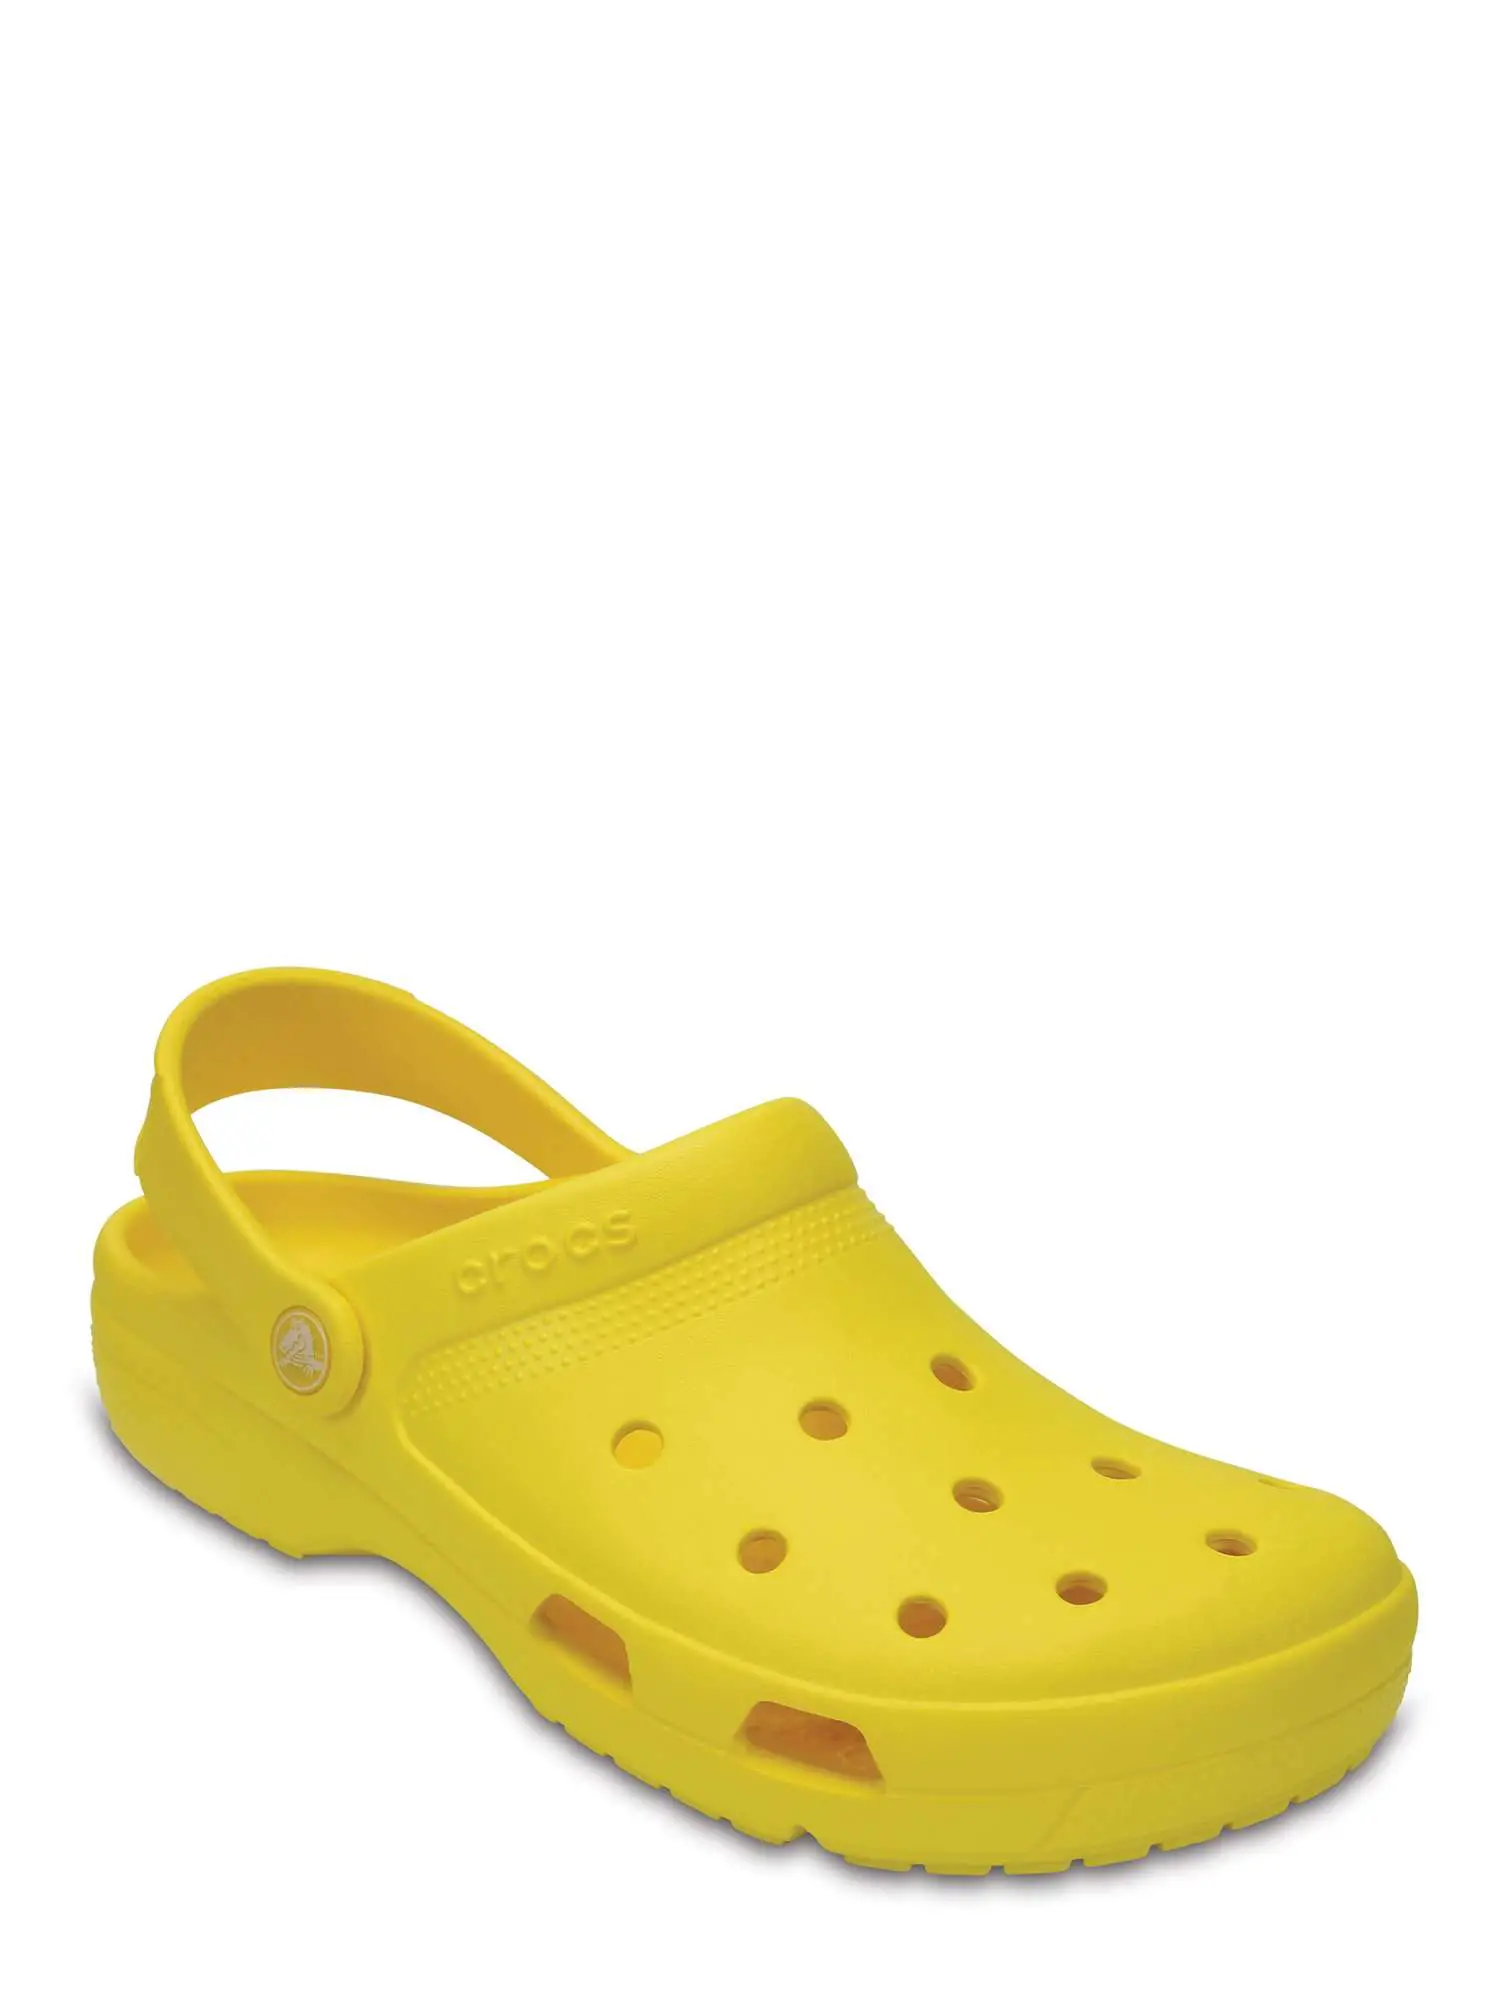 Did Walmart Ever Sell Crocs